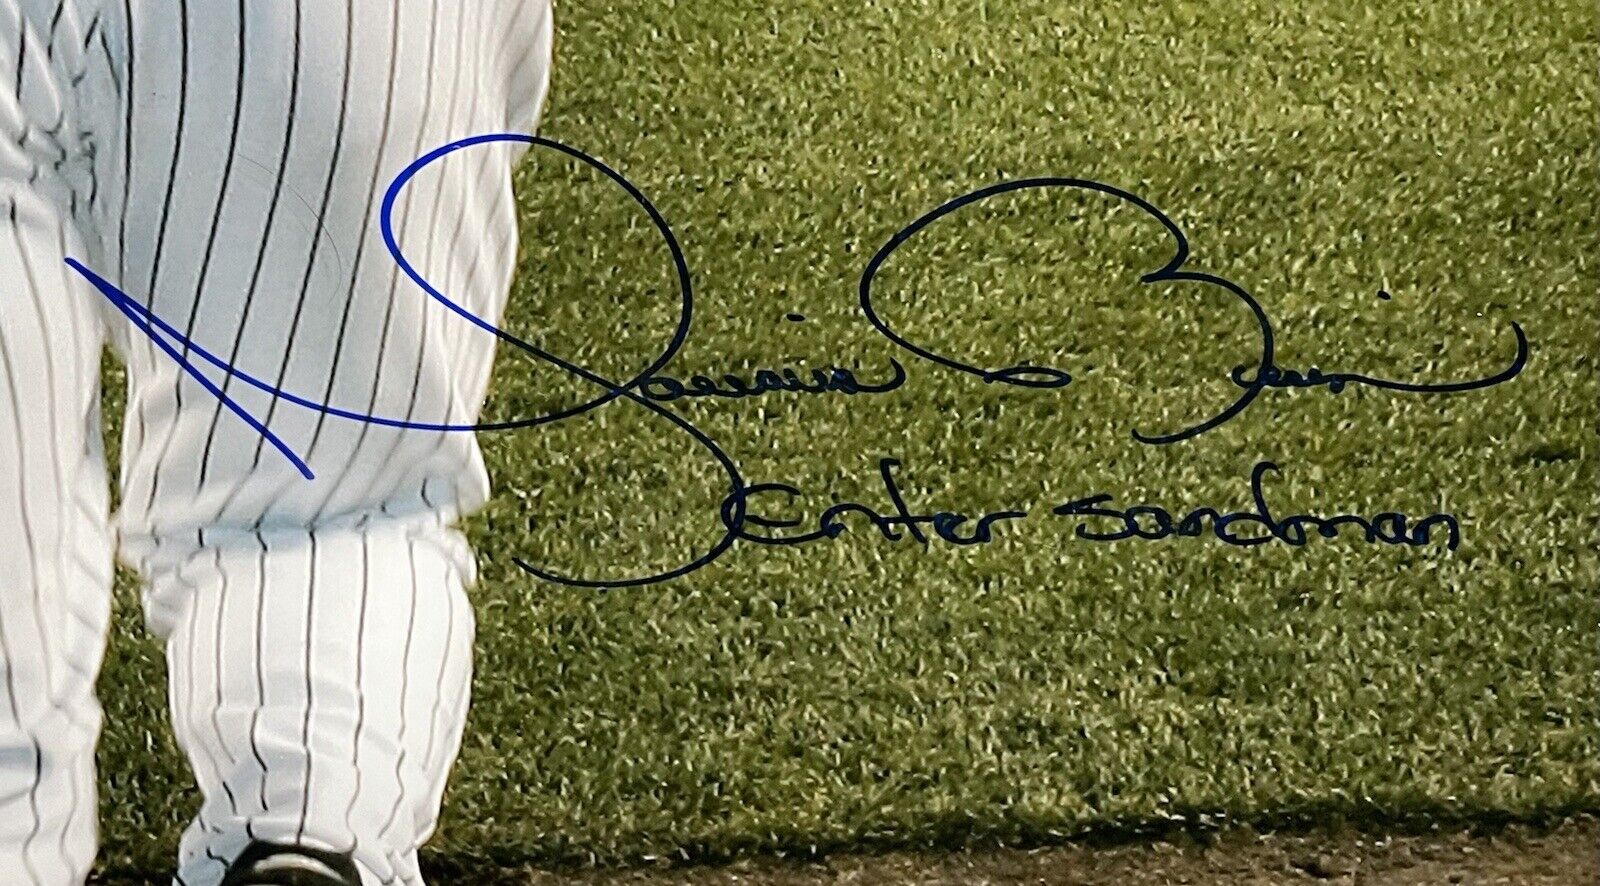 Framed Mariano Rivera Sandman Facsimile Laser Engraved Signature Auto New  York Yankees 14x17 Baseball Photo - Hall of Fame Sports Memorabilia